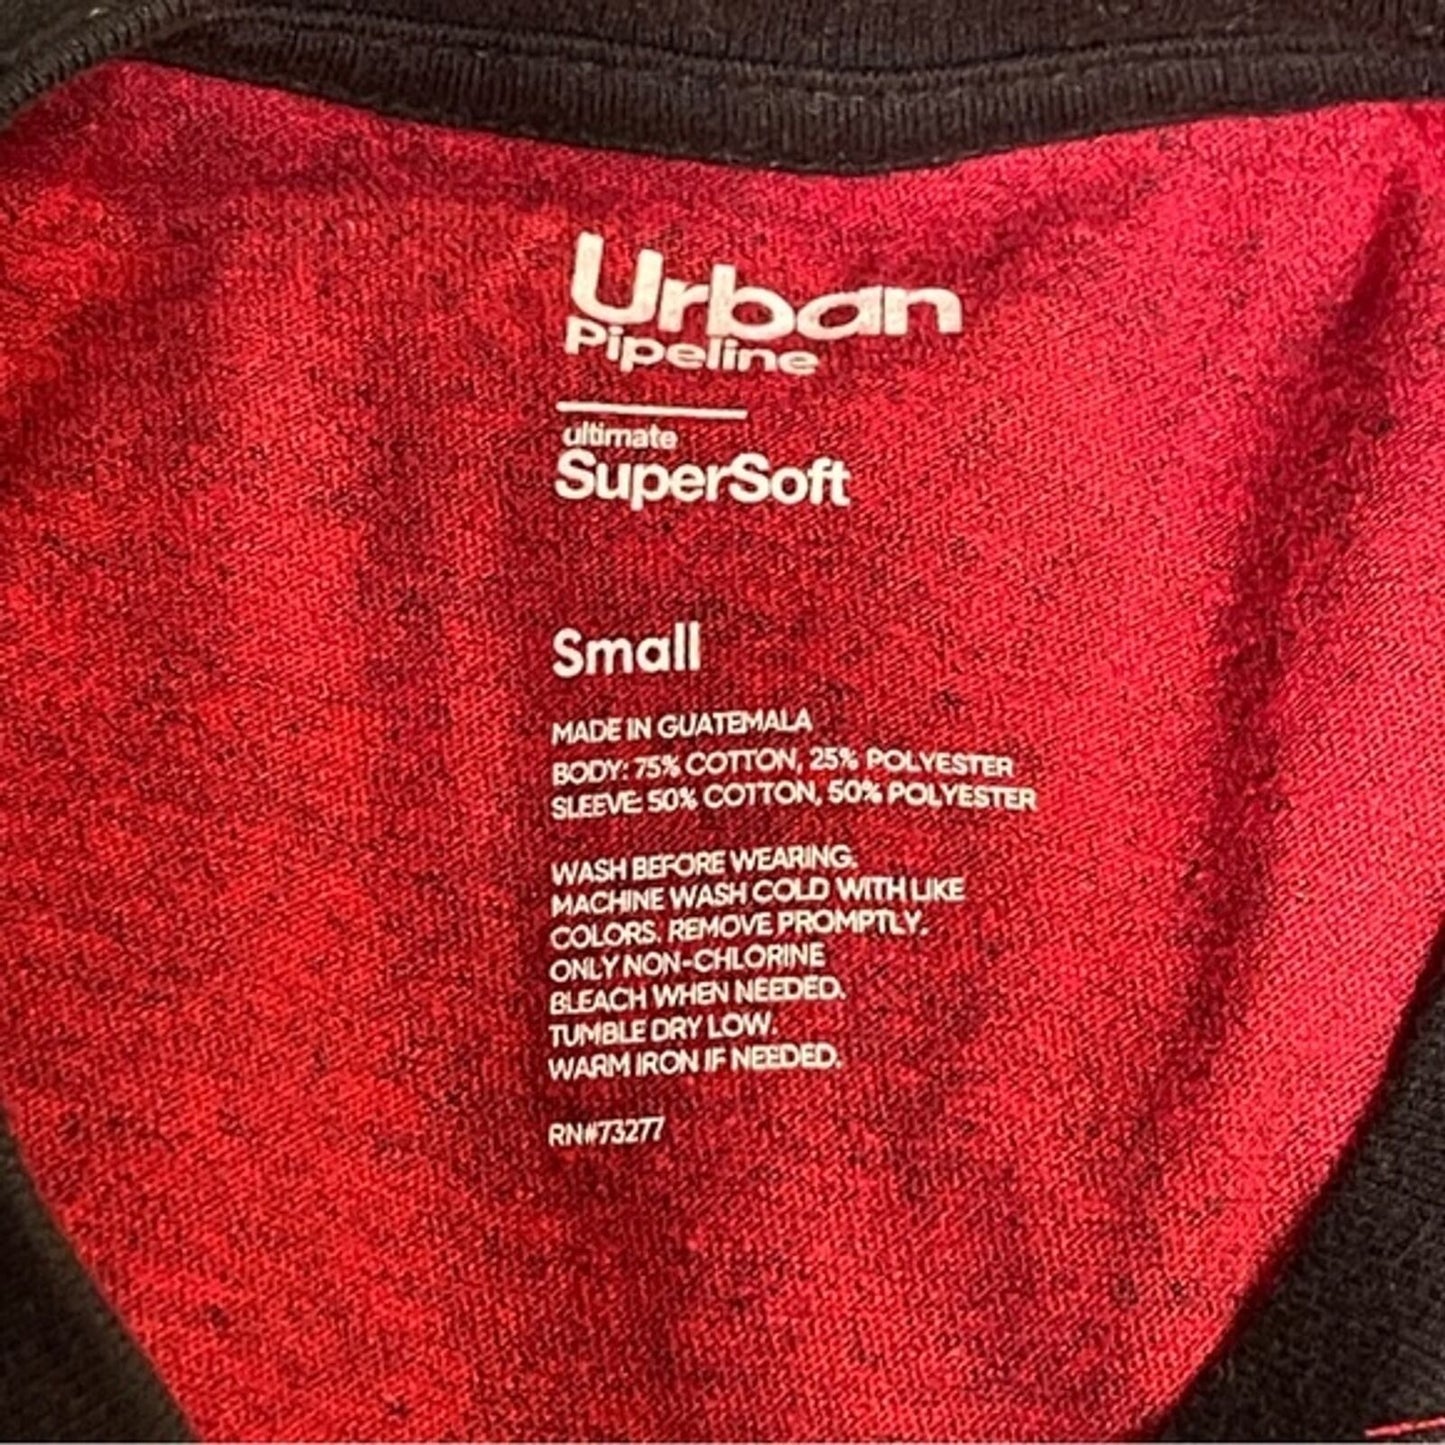 Urban Pipeline Ultimate Super Soft Raglan Shirt Size Small